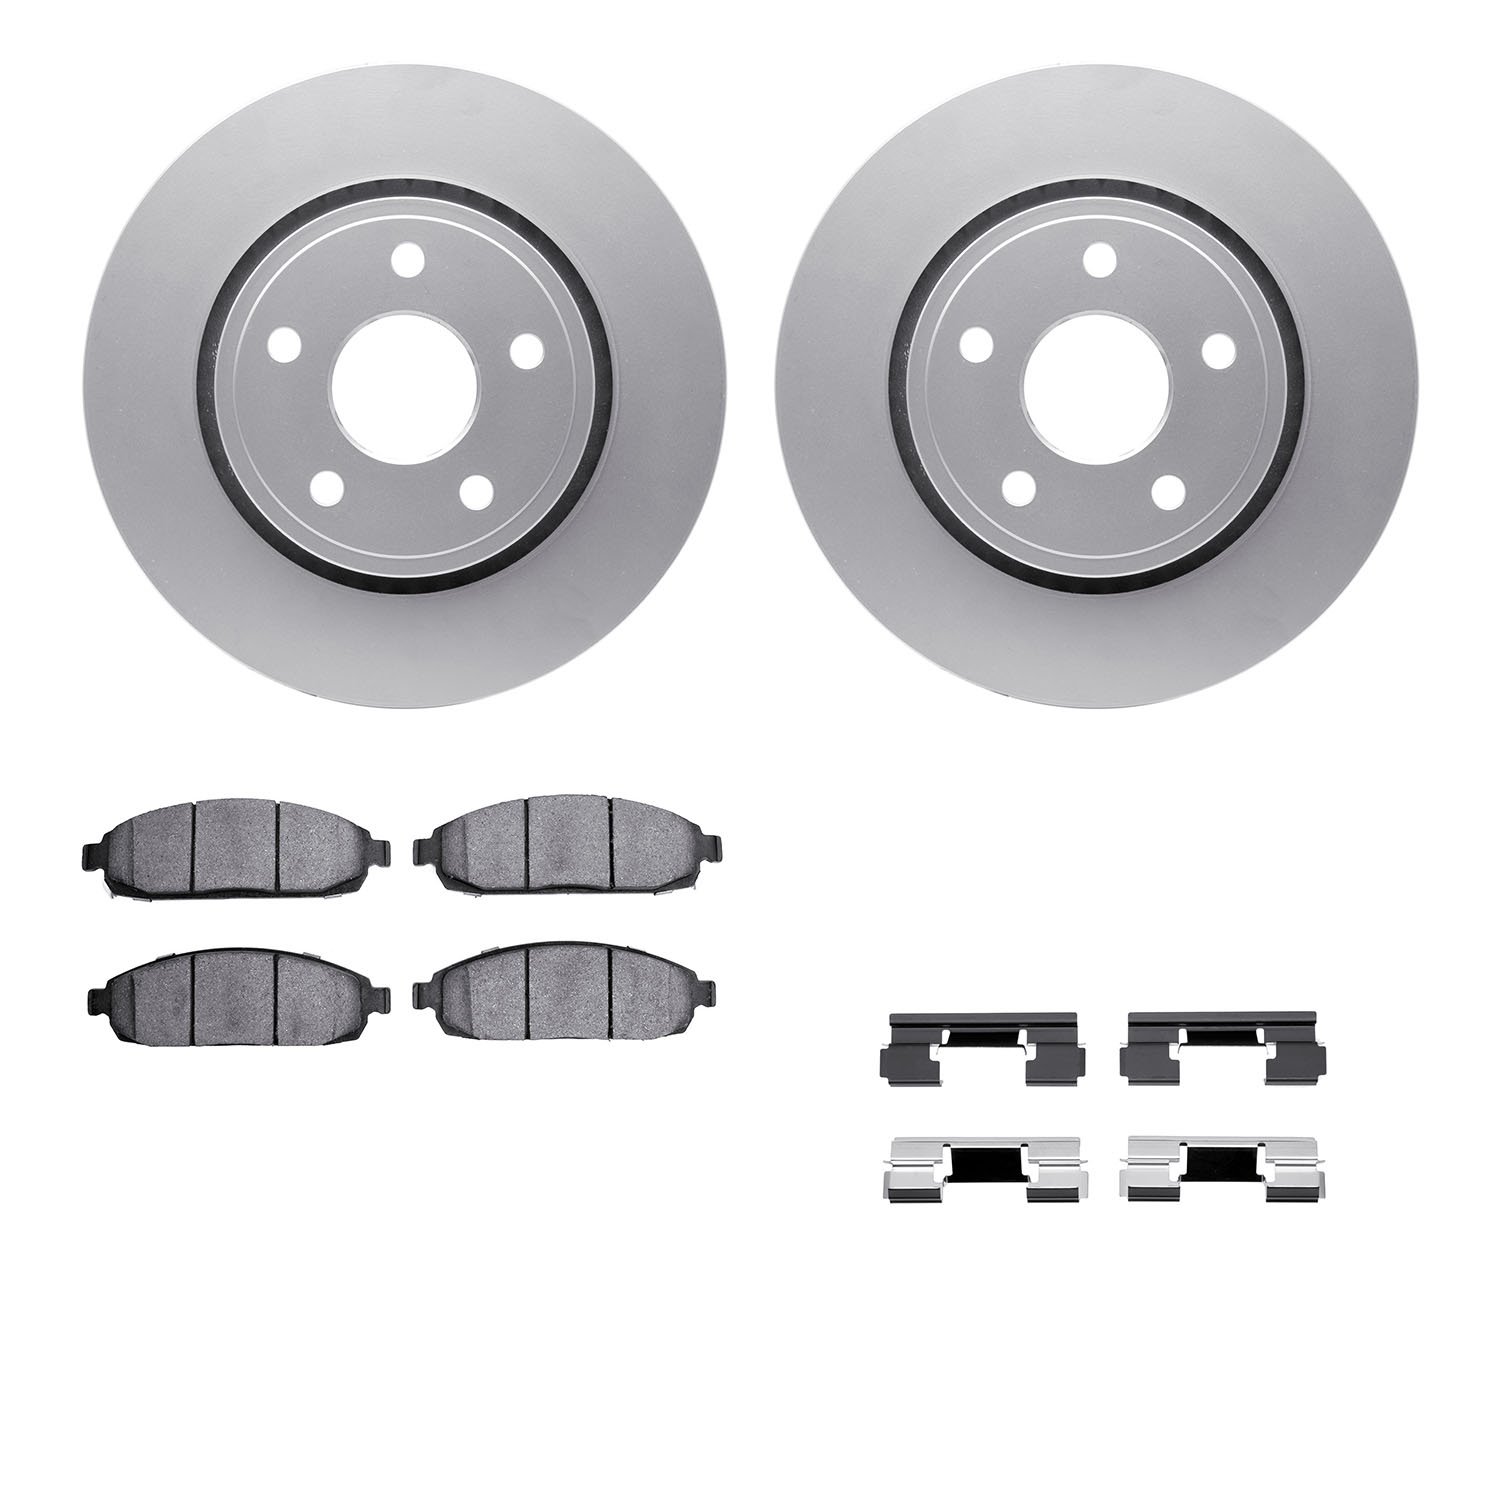 4412-42001 Geospec Brake Rotors with Ultimate-Duty Brake Pads & Hardware, 2005-2010 Mopar, Position: Front